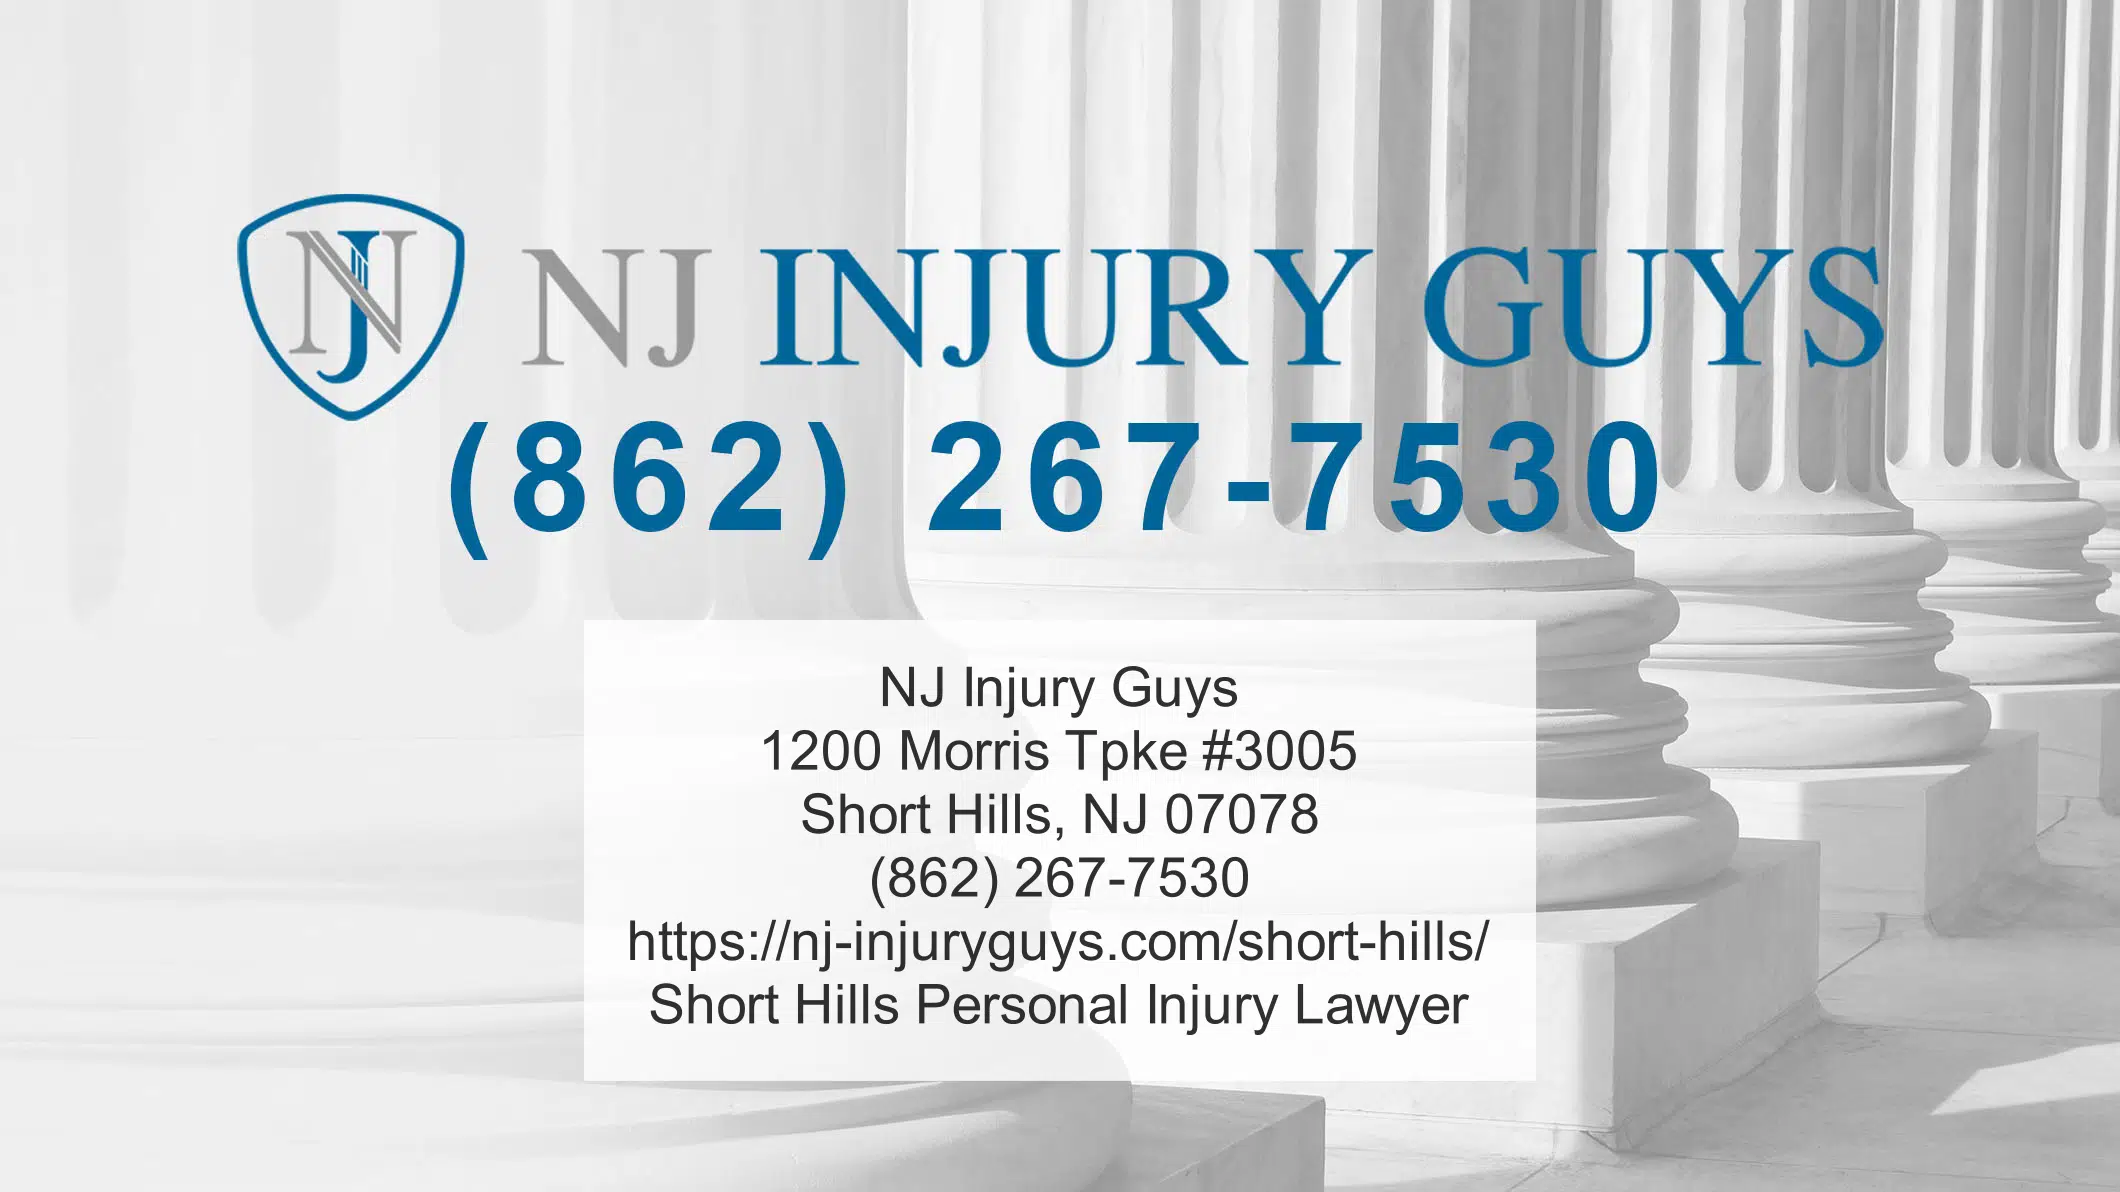 Personal-Injury-Lawyer-Near-Me-Short-Hills-NJ-Injury-Guys-1-scaled.jpg.webp